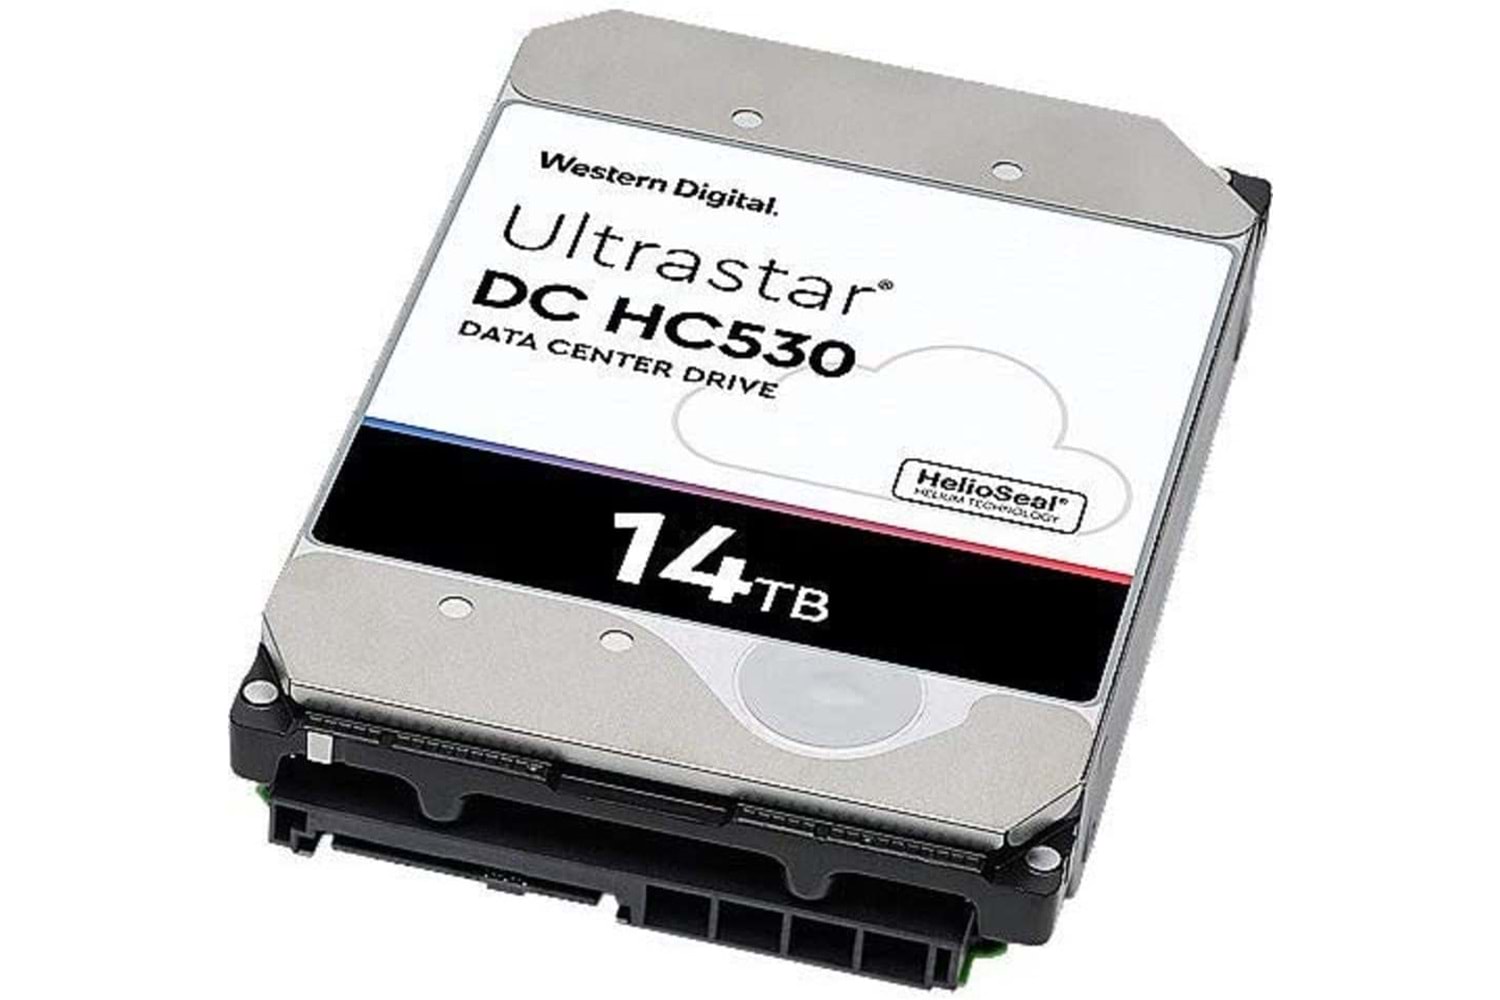 WD 14TB Ultrastar 3.5 DC HC530 Enterprise Data Center Disk 0F31284